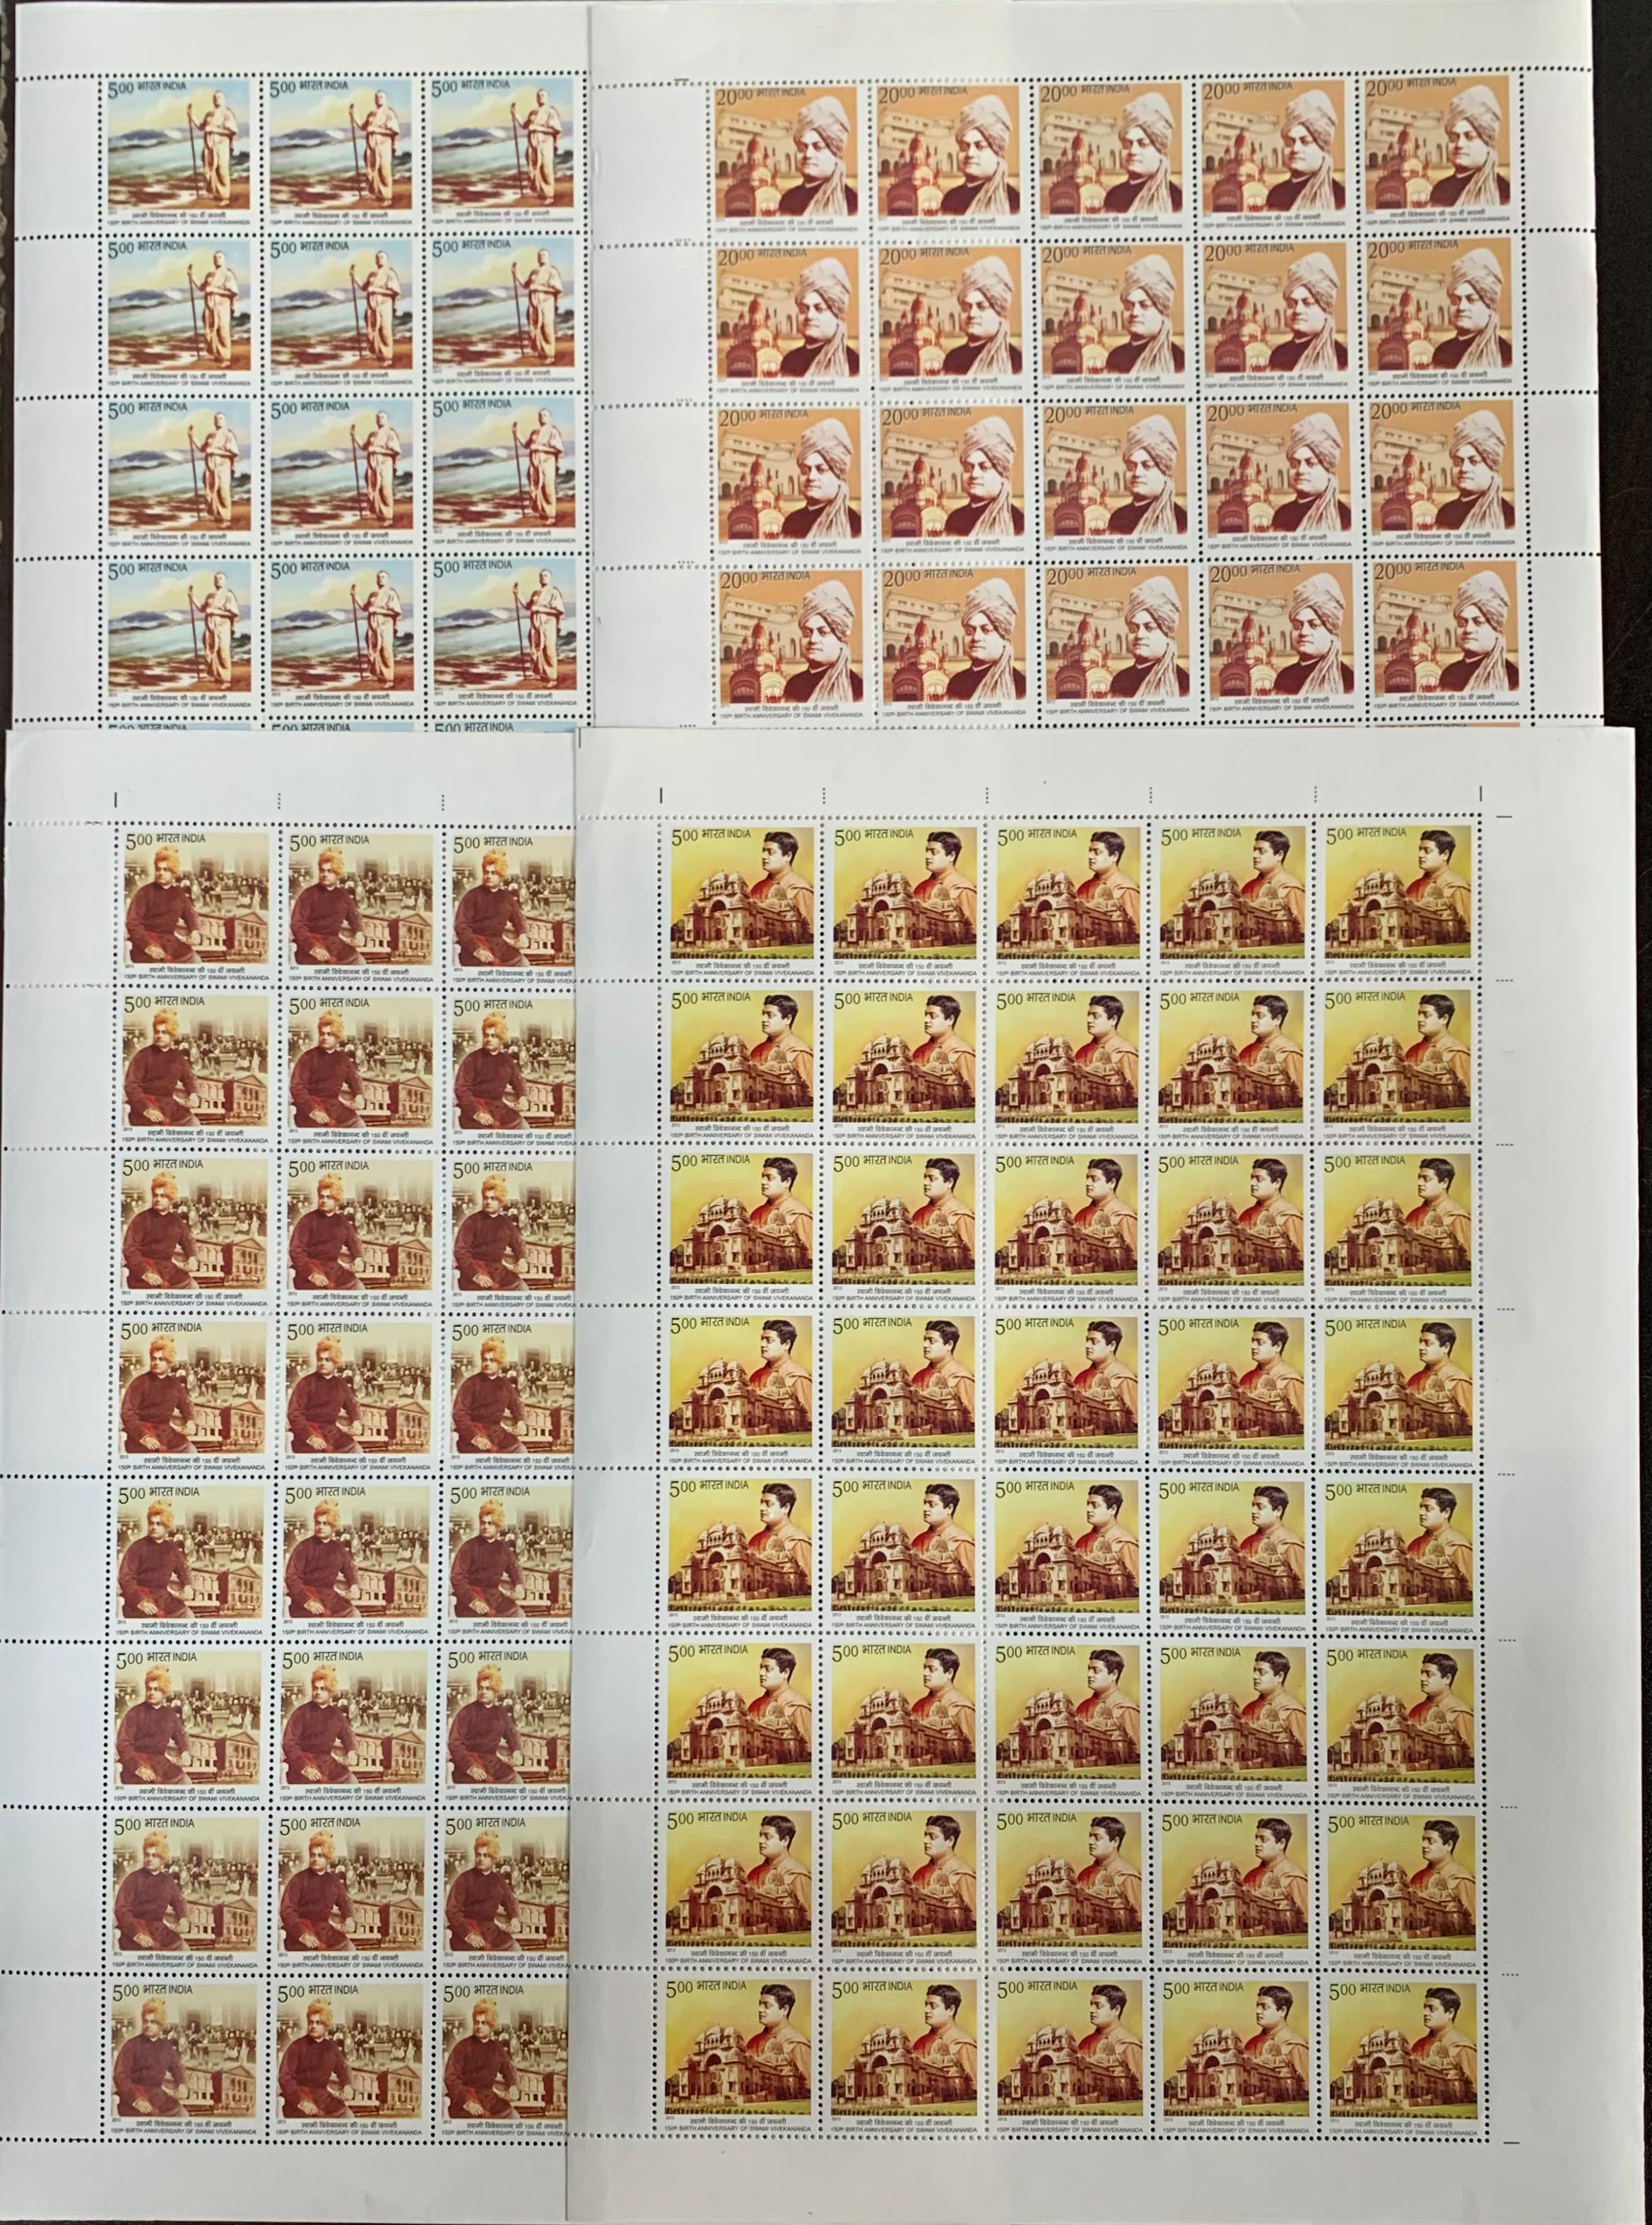 India 2013 150th Birth Anniv. of Swami Vivekananda(Hindu Monk) Set of 4 Full Sheet